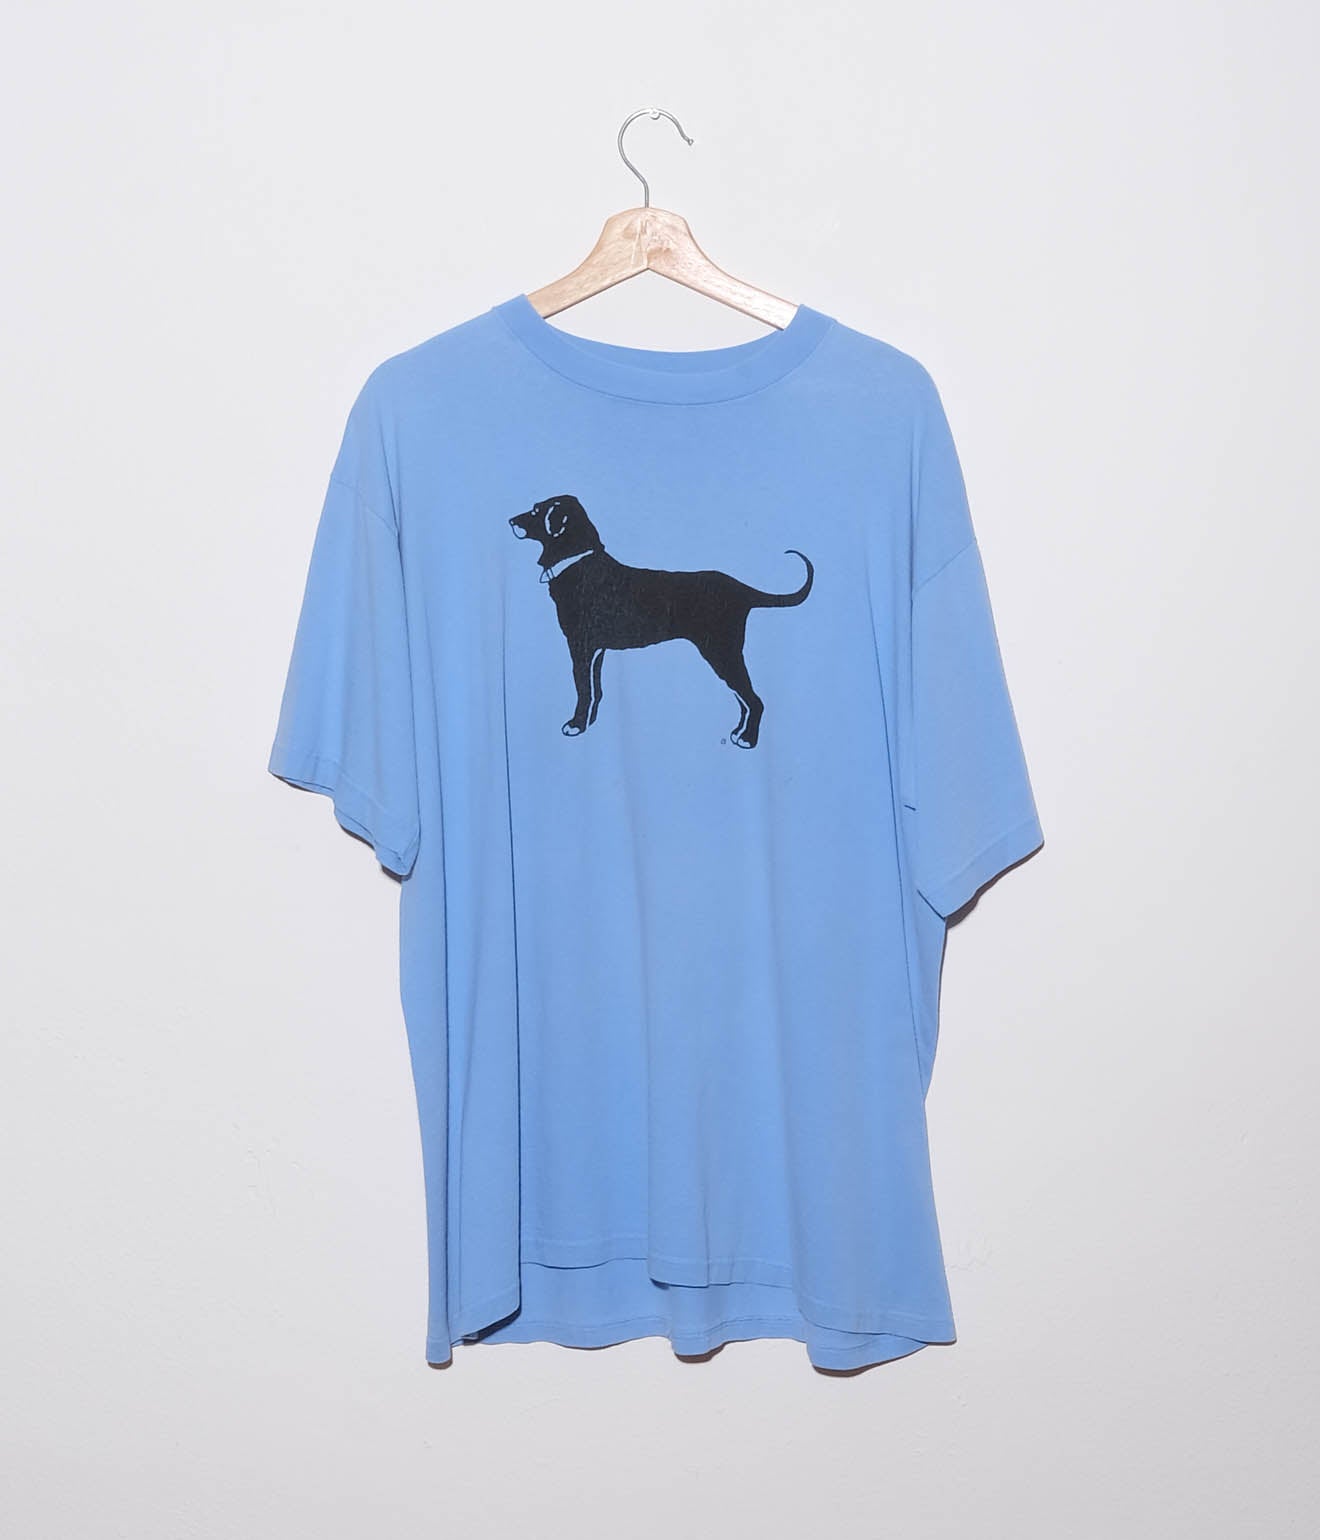 98's The Black Dog Short Sleeve Tee Shirt (Blue)